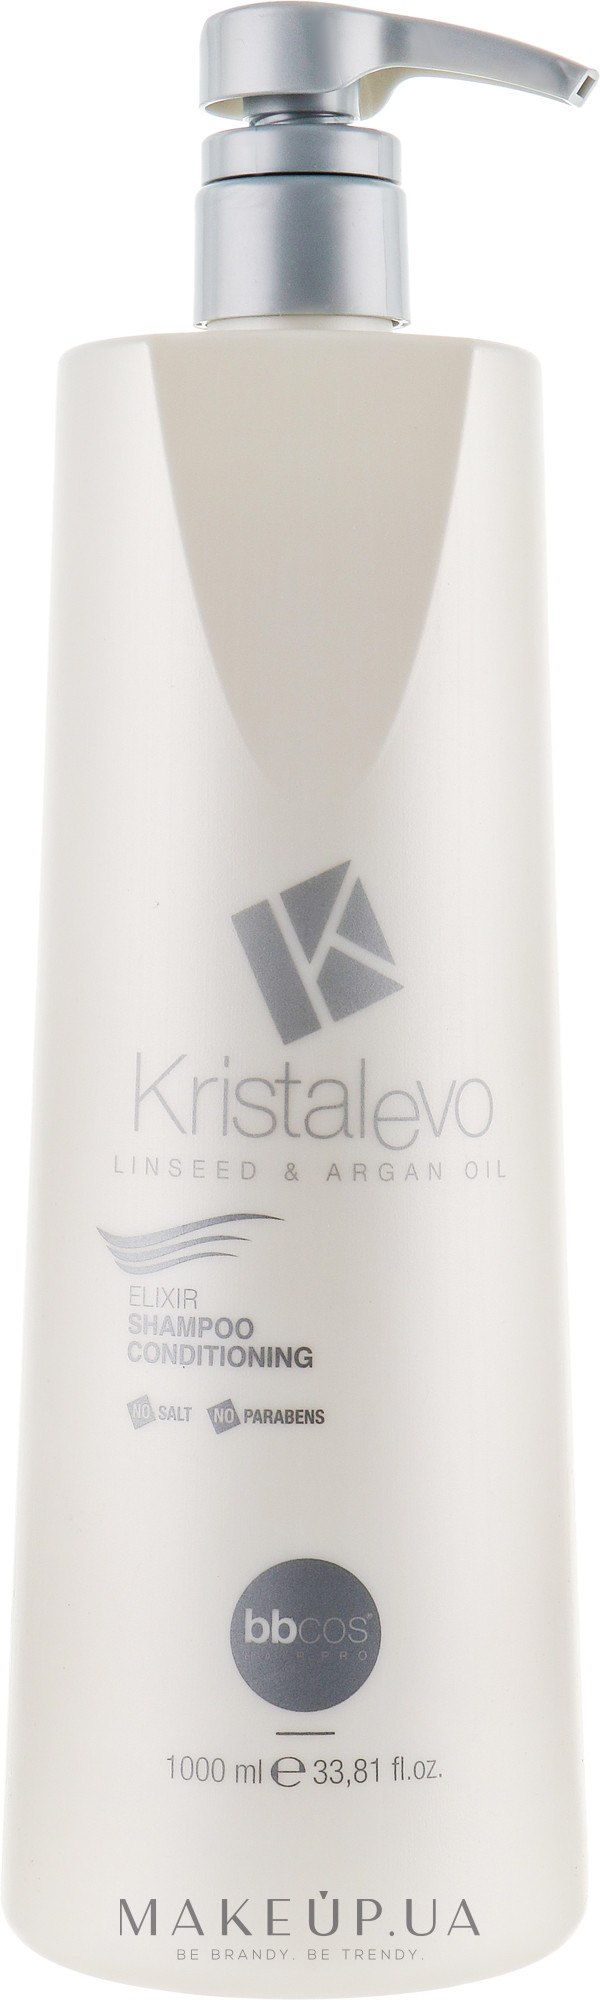 Шампунь-еліксир для волосся  - Bbcos Kristal Evo Elixir Shampoo Conditioning — фото 1000ml